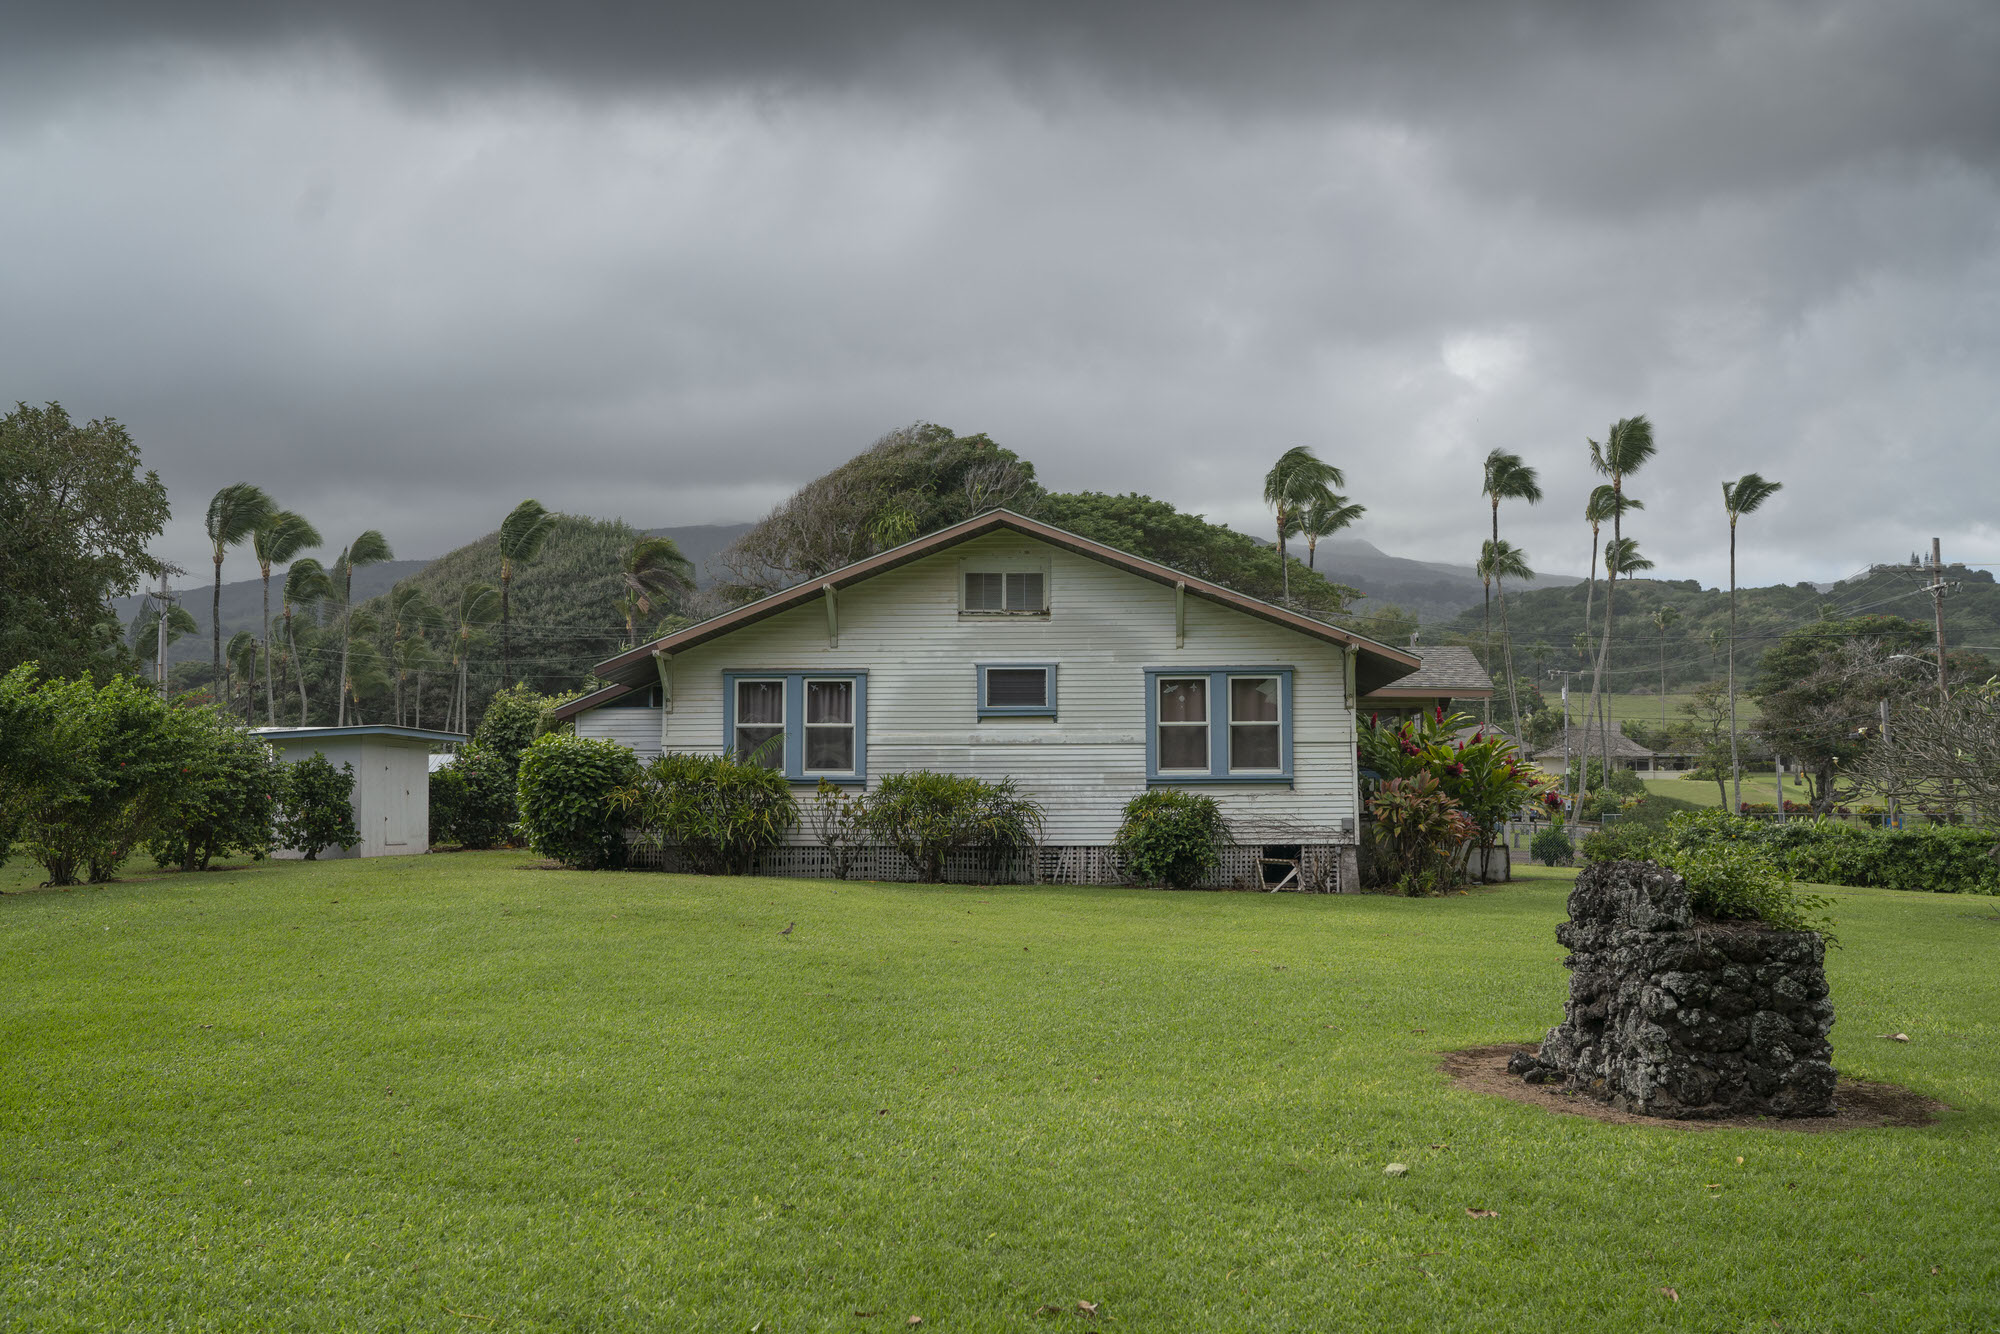 Humble house in the town of Hana, Hawaii